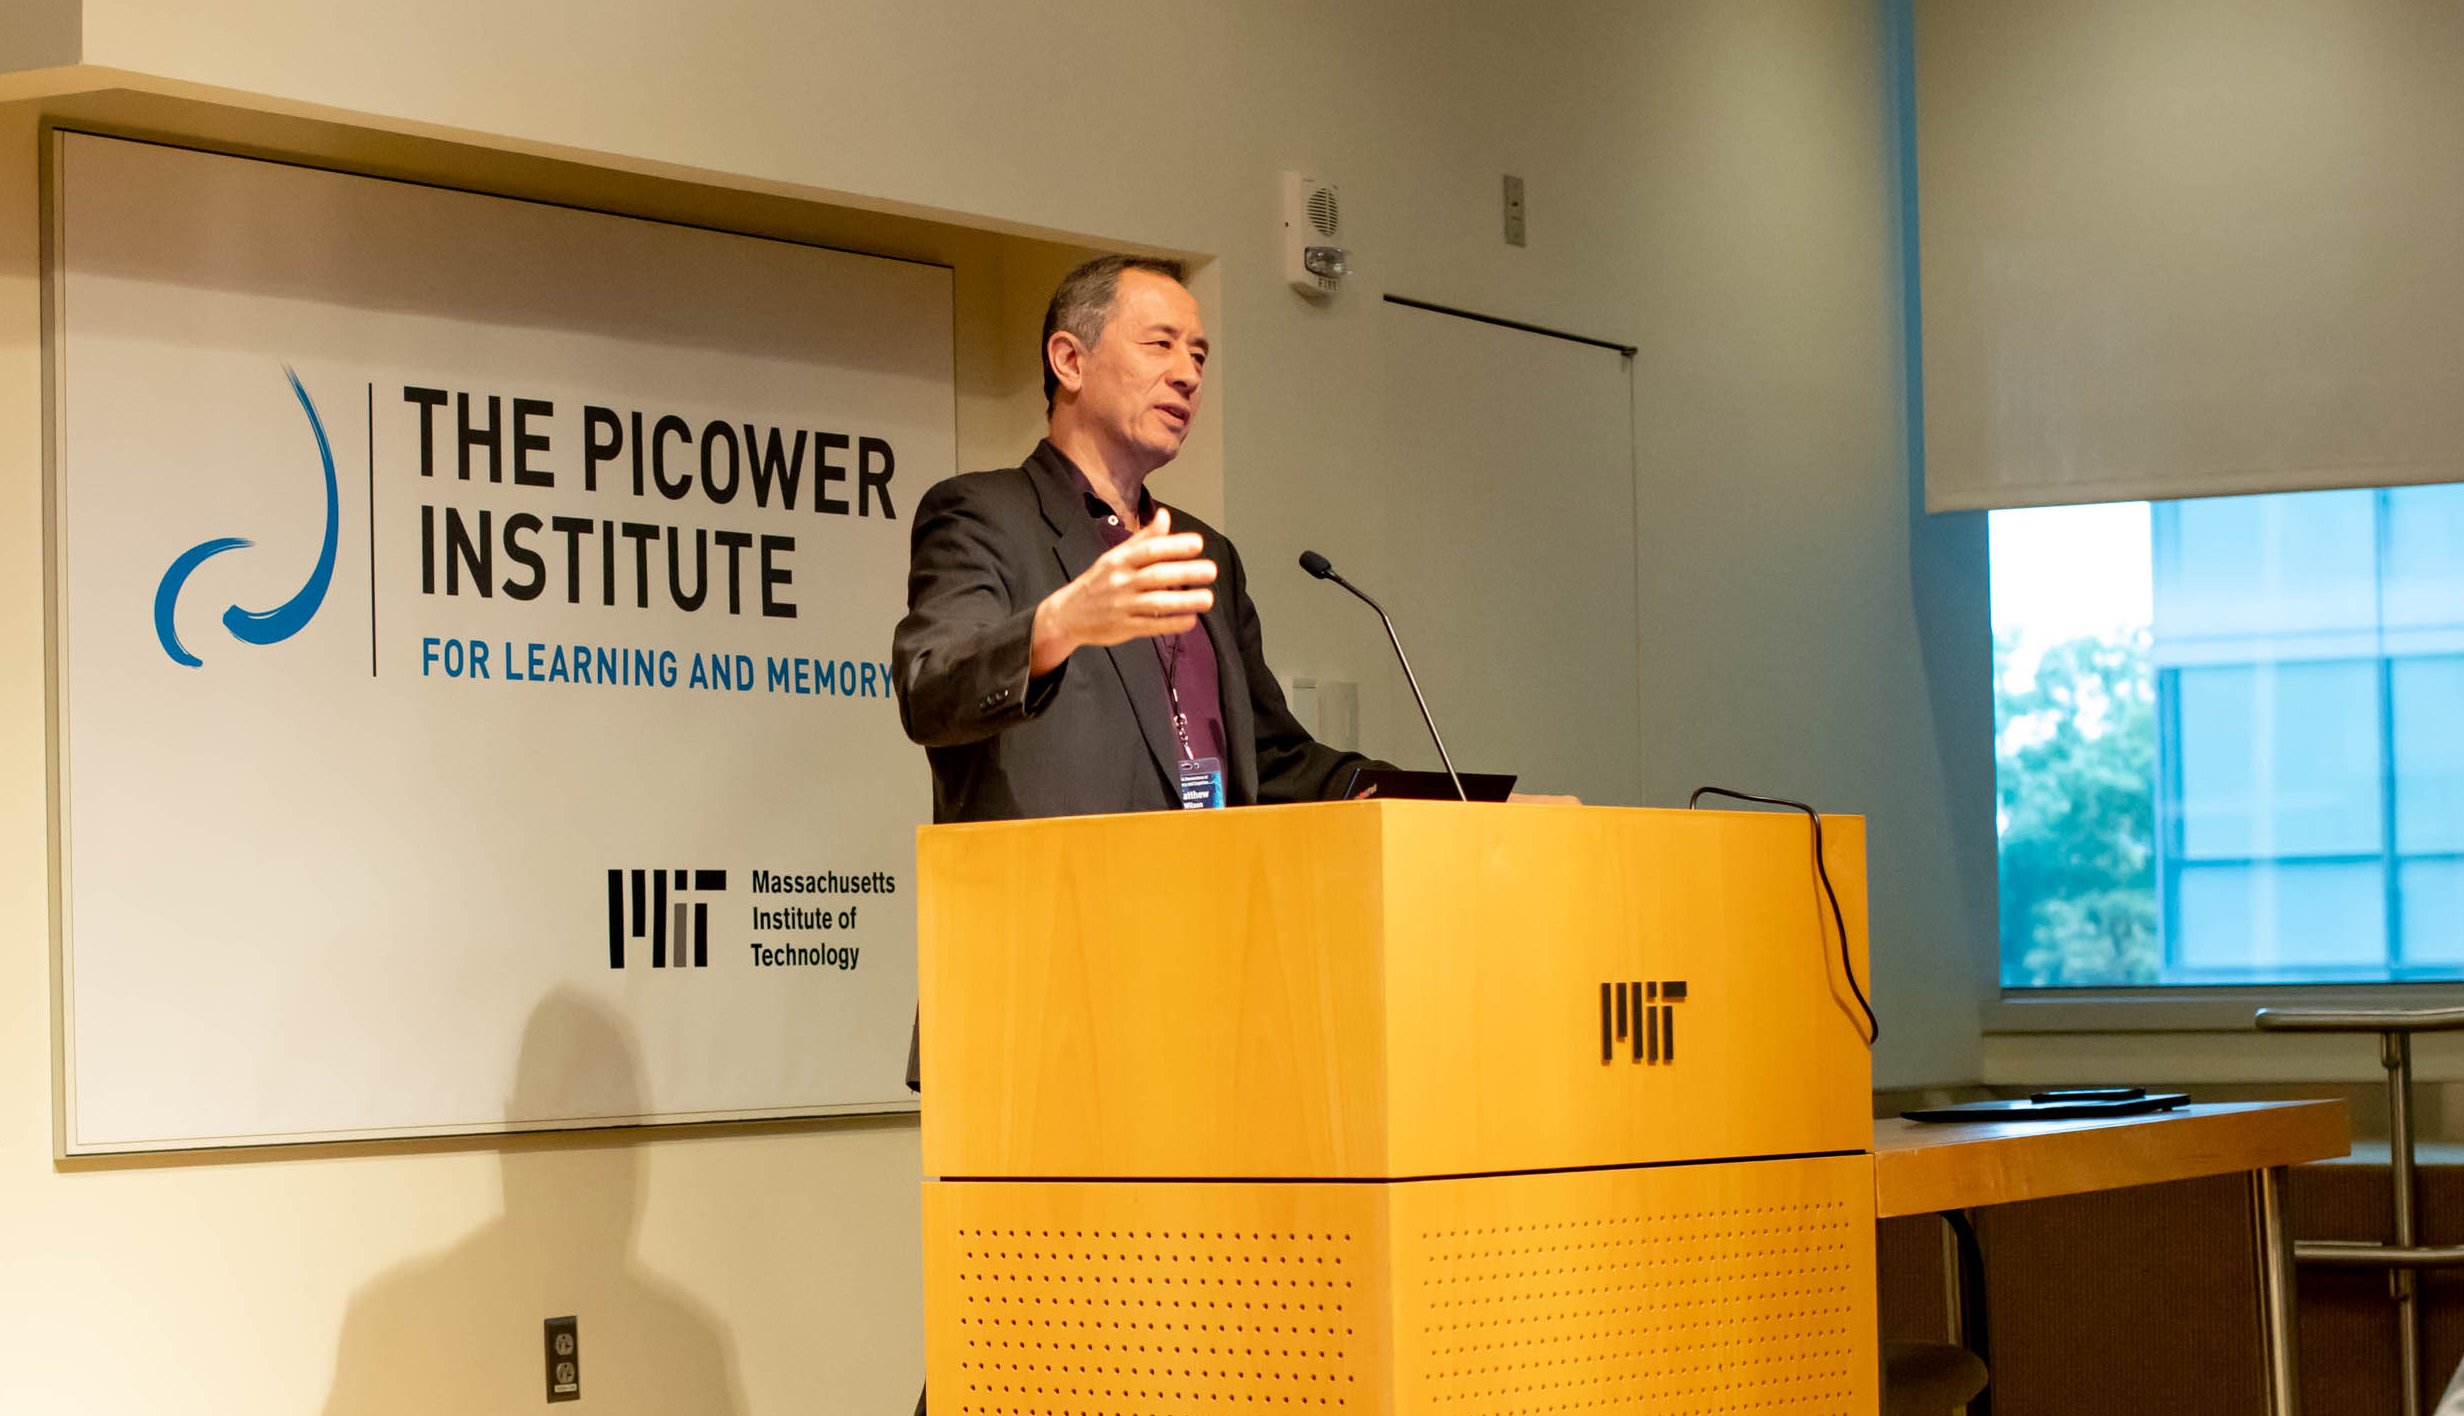 Matthew Wilson stands at an MIT podium with the Picower Institute logo behind him